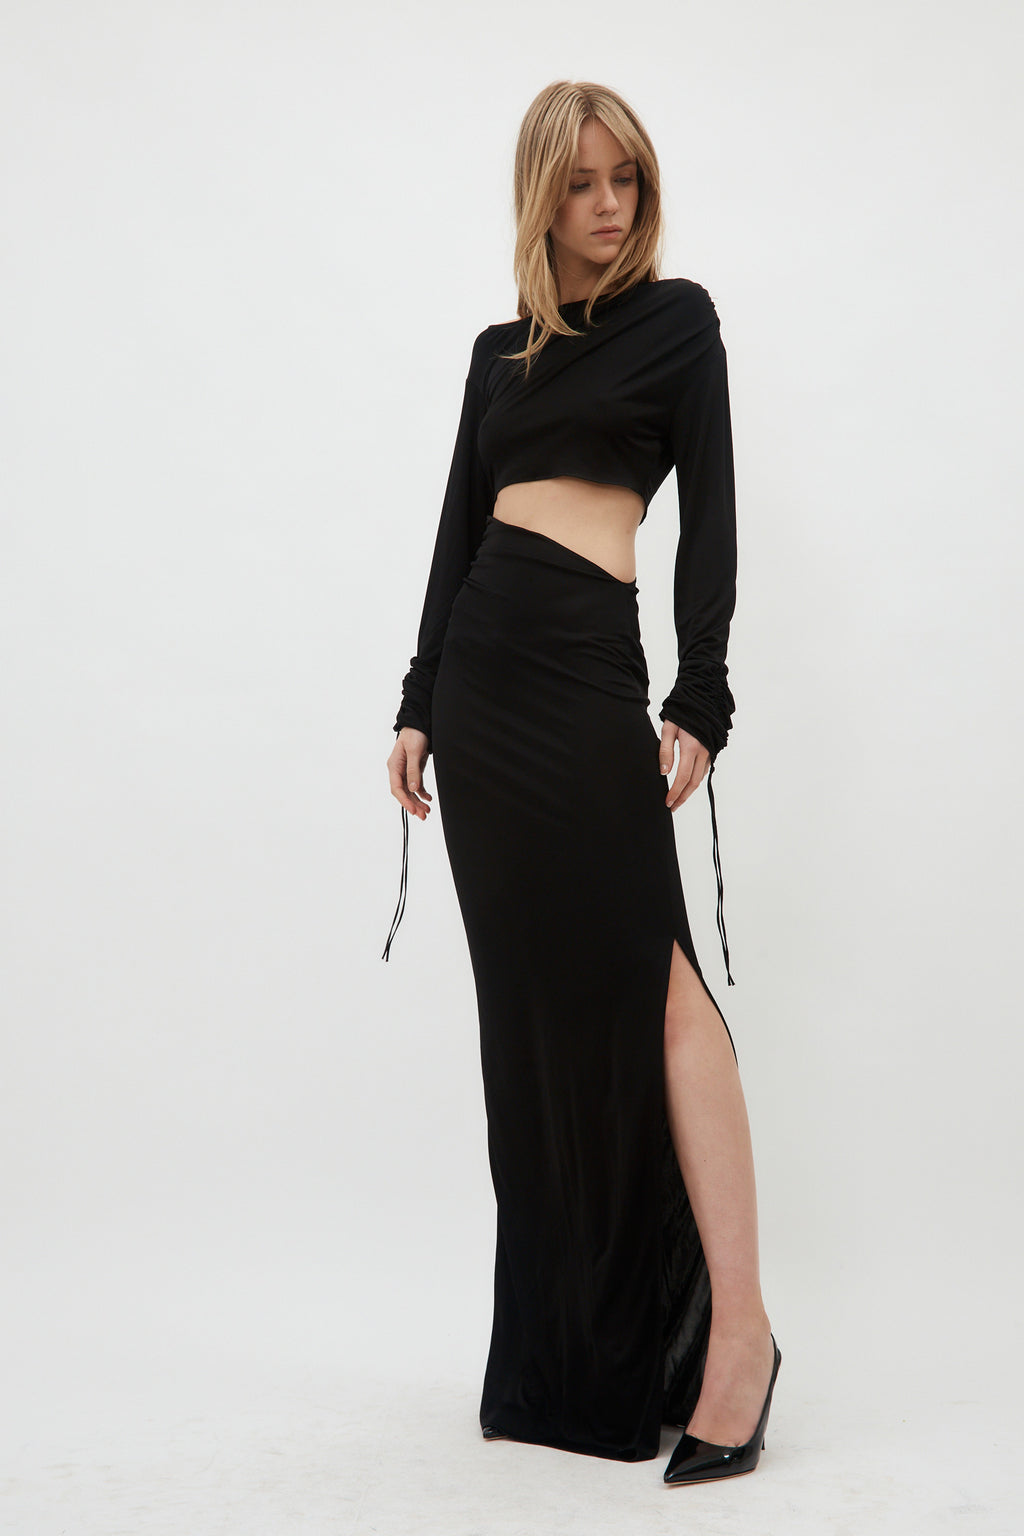 Long Sleeve Cut Out Black Dress